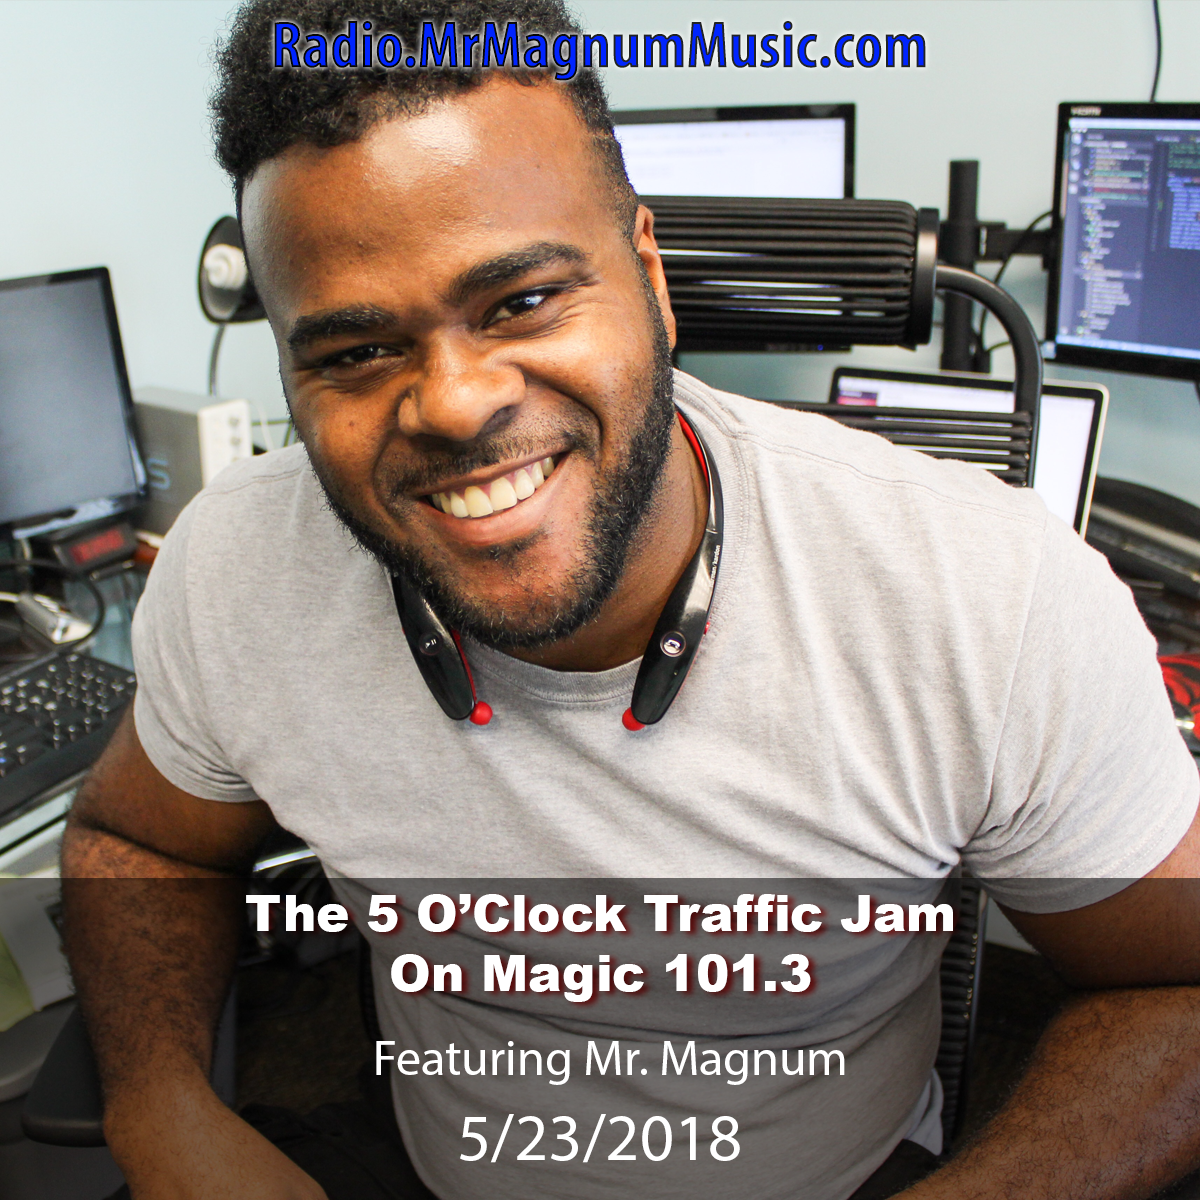 5 O’Clock Traffic Jam 5-23-3018 on Magic 101.3